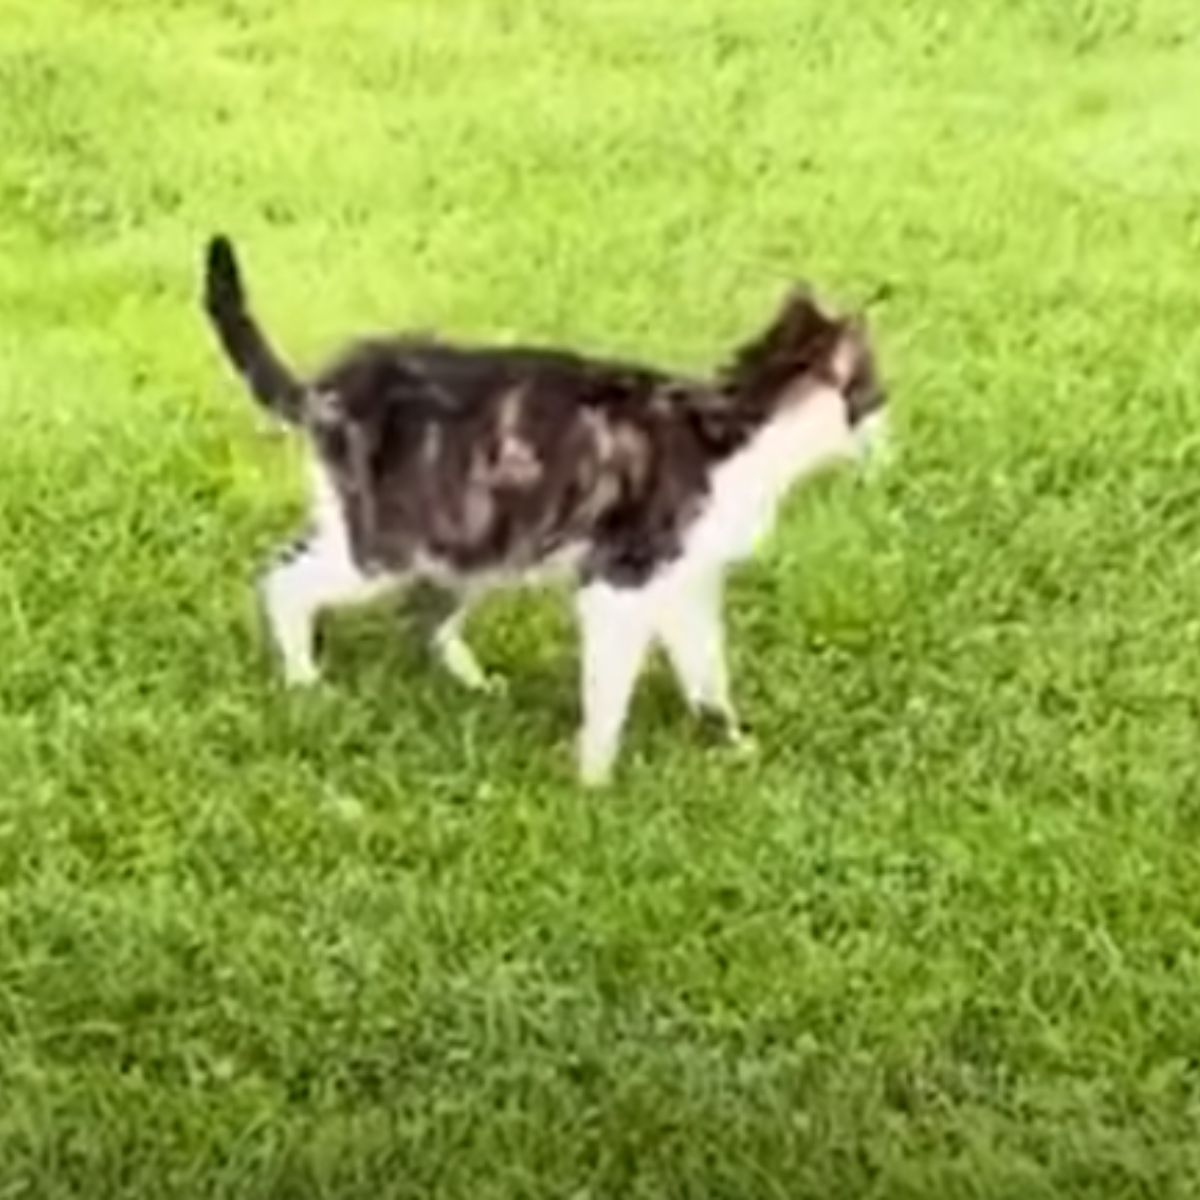 senior cat on grass